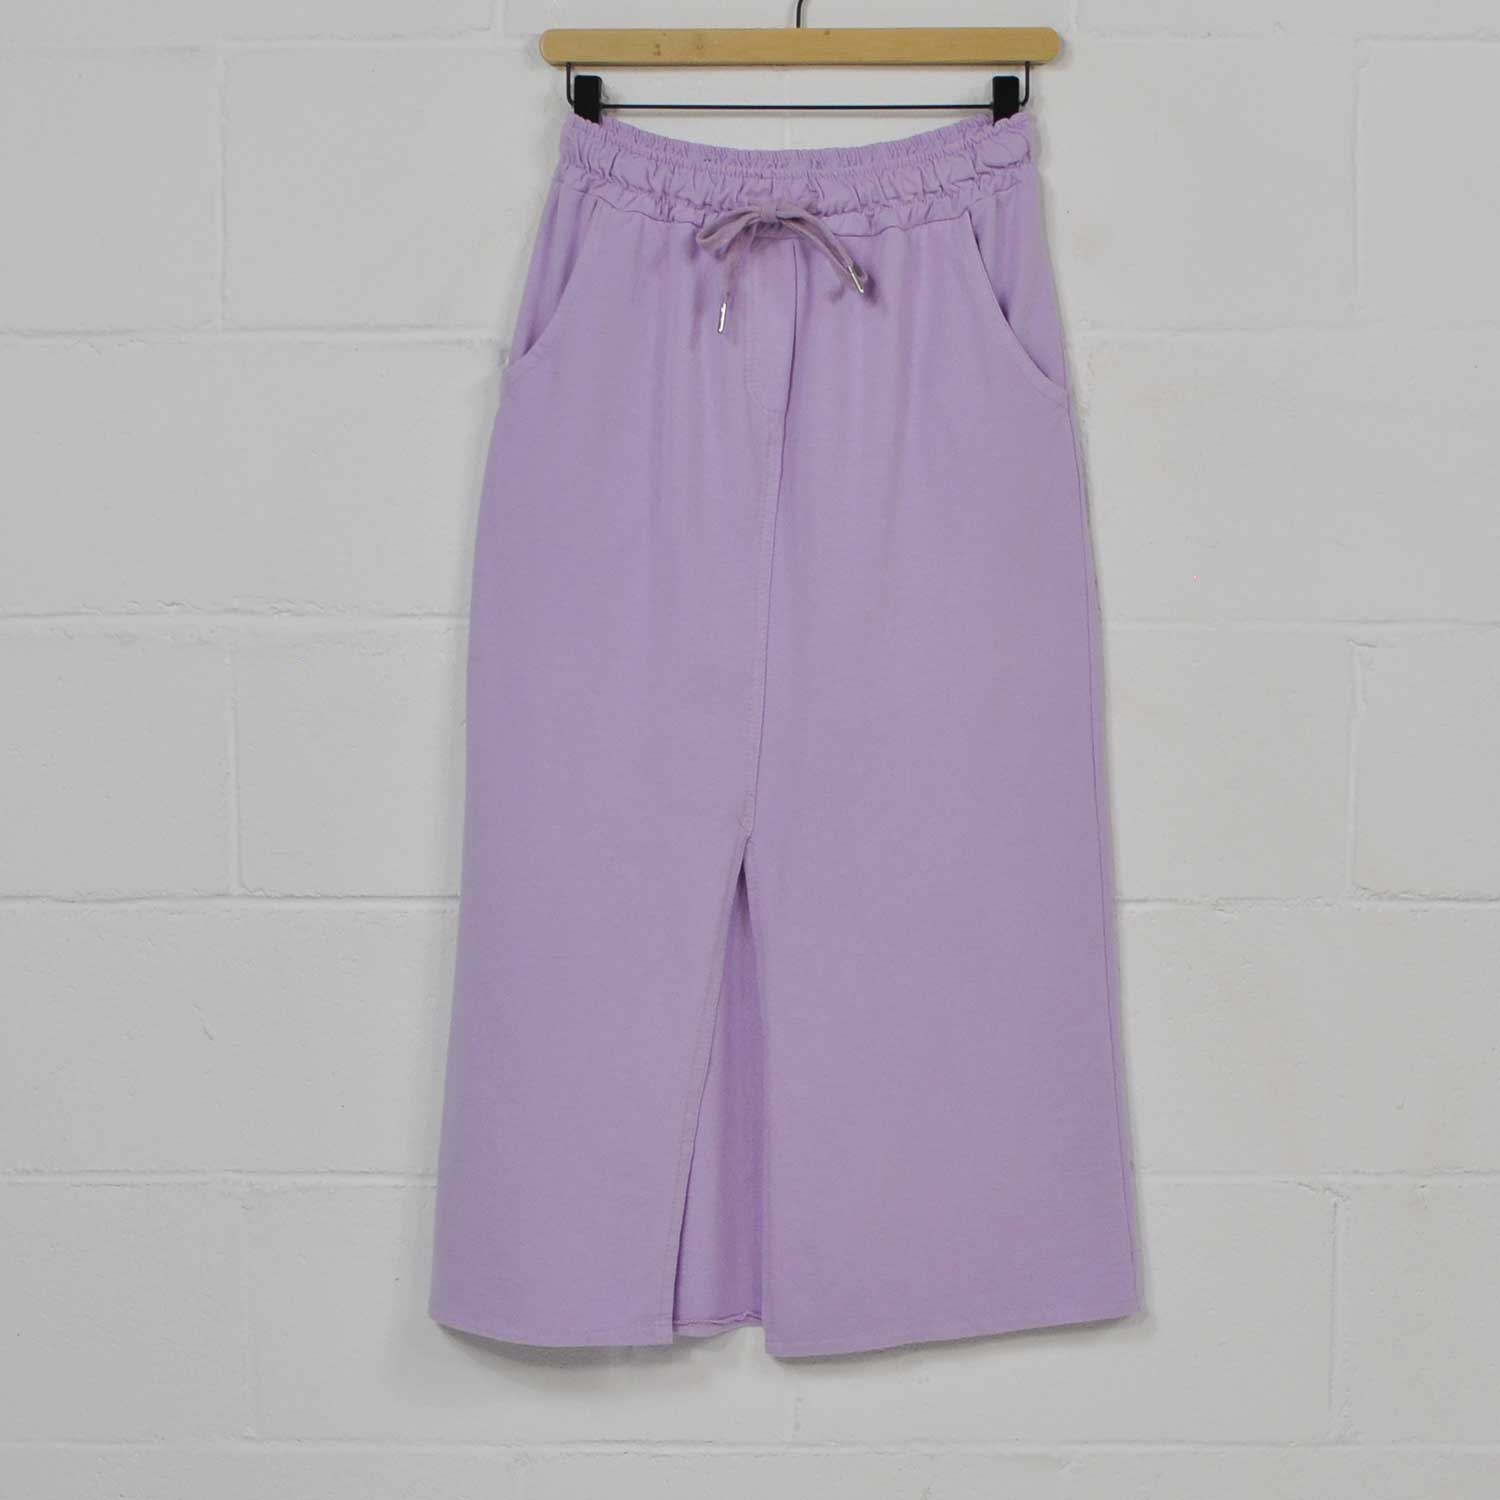 Violet cotton skirt